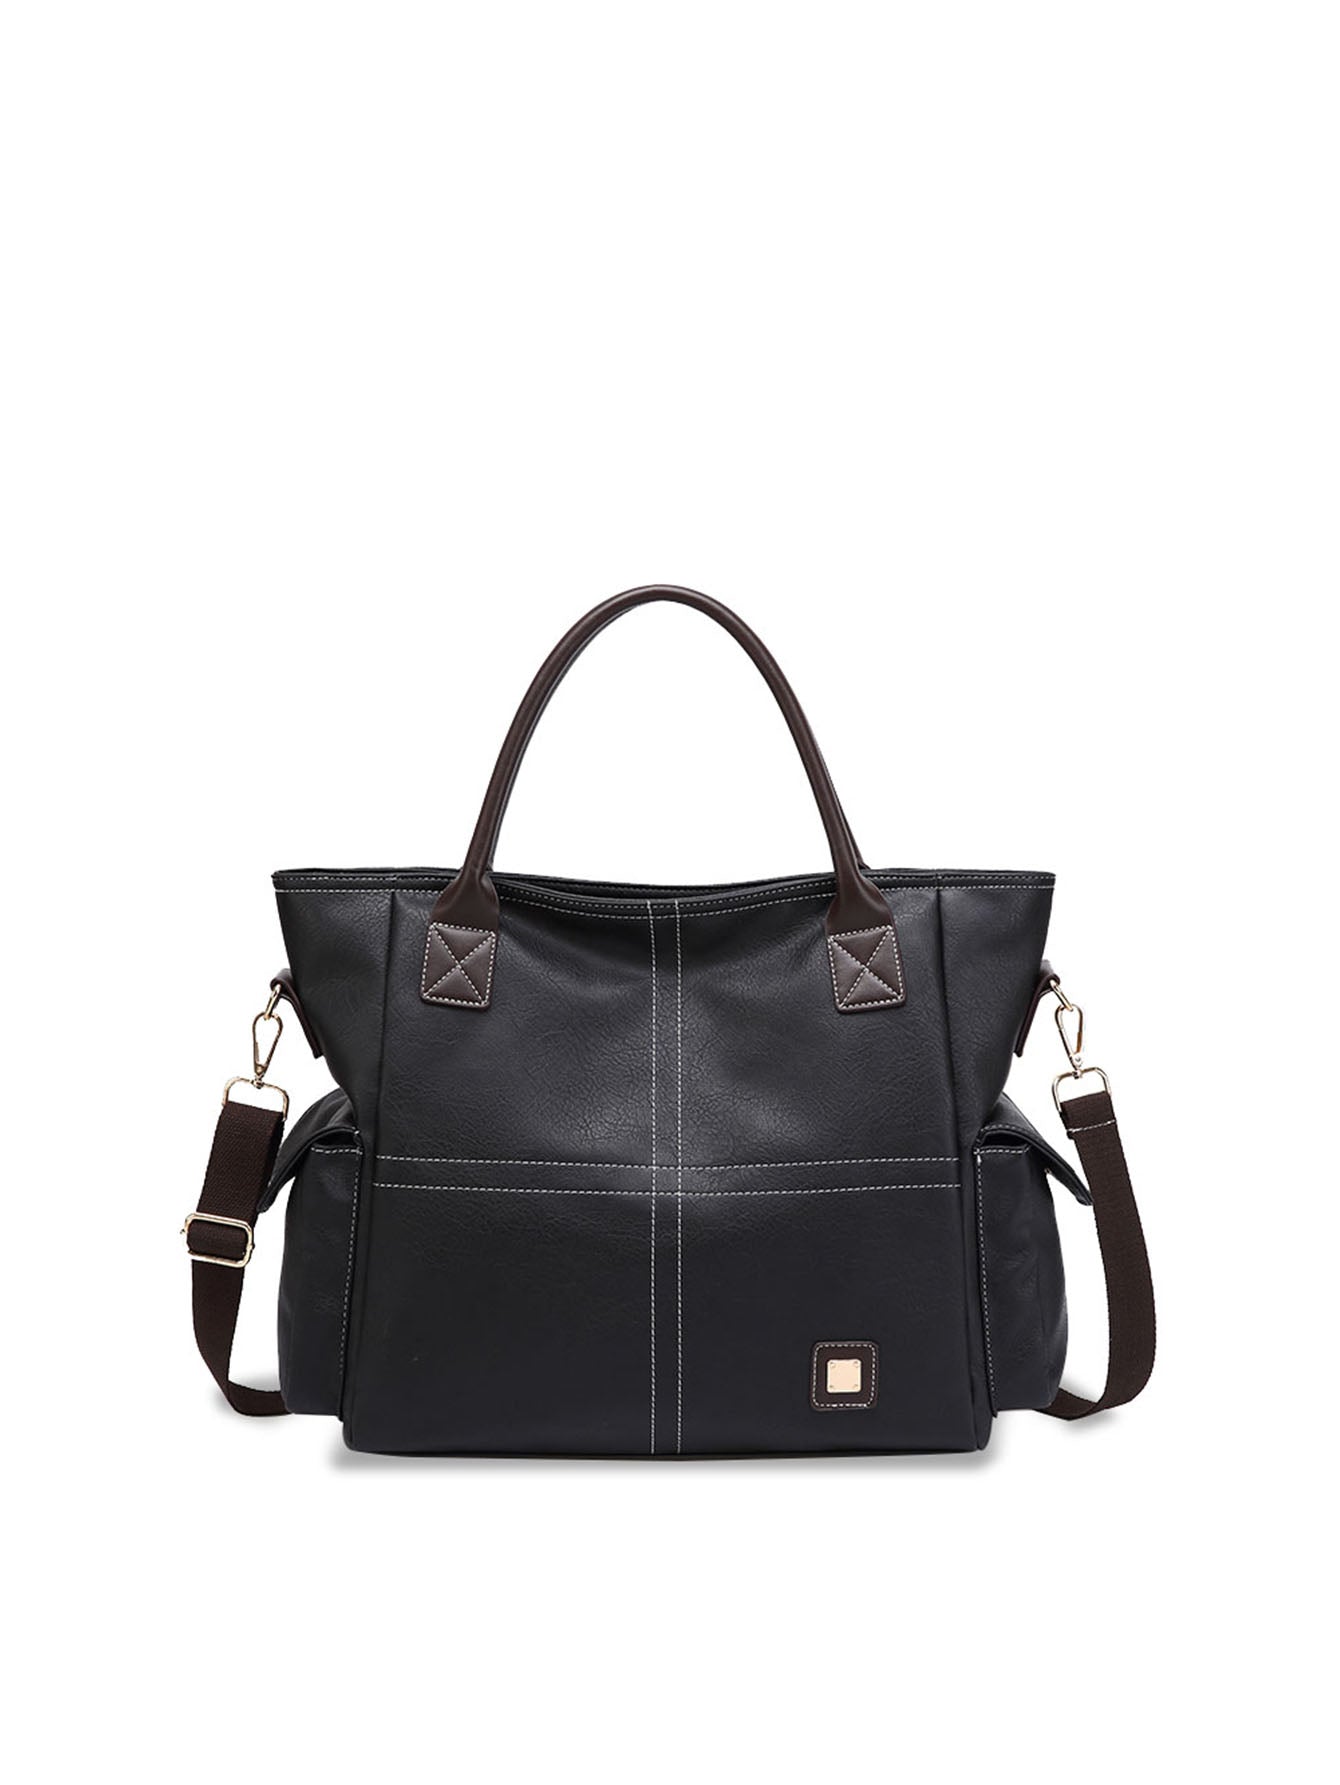 Women Leather Tote Shoulder Handbag Soft Large Capacity Top Handle Satchel Purse Casual Work Travel Bag Sai Feel